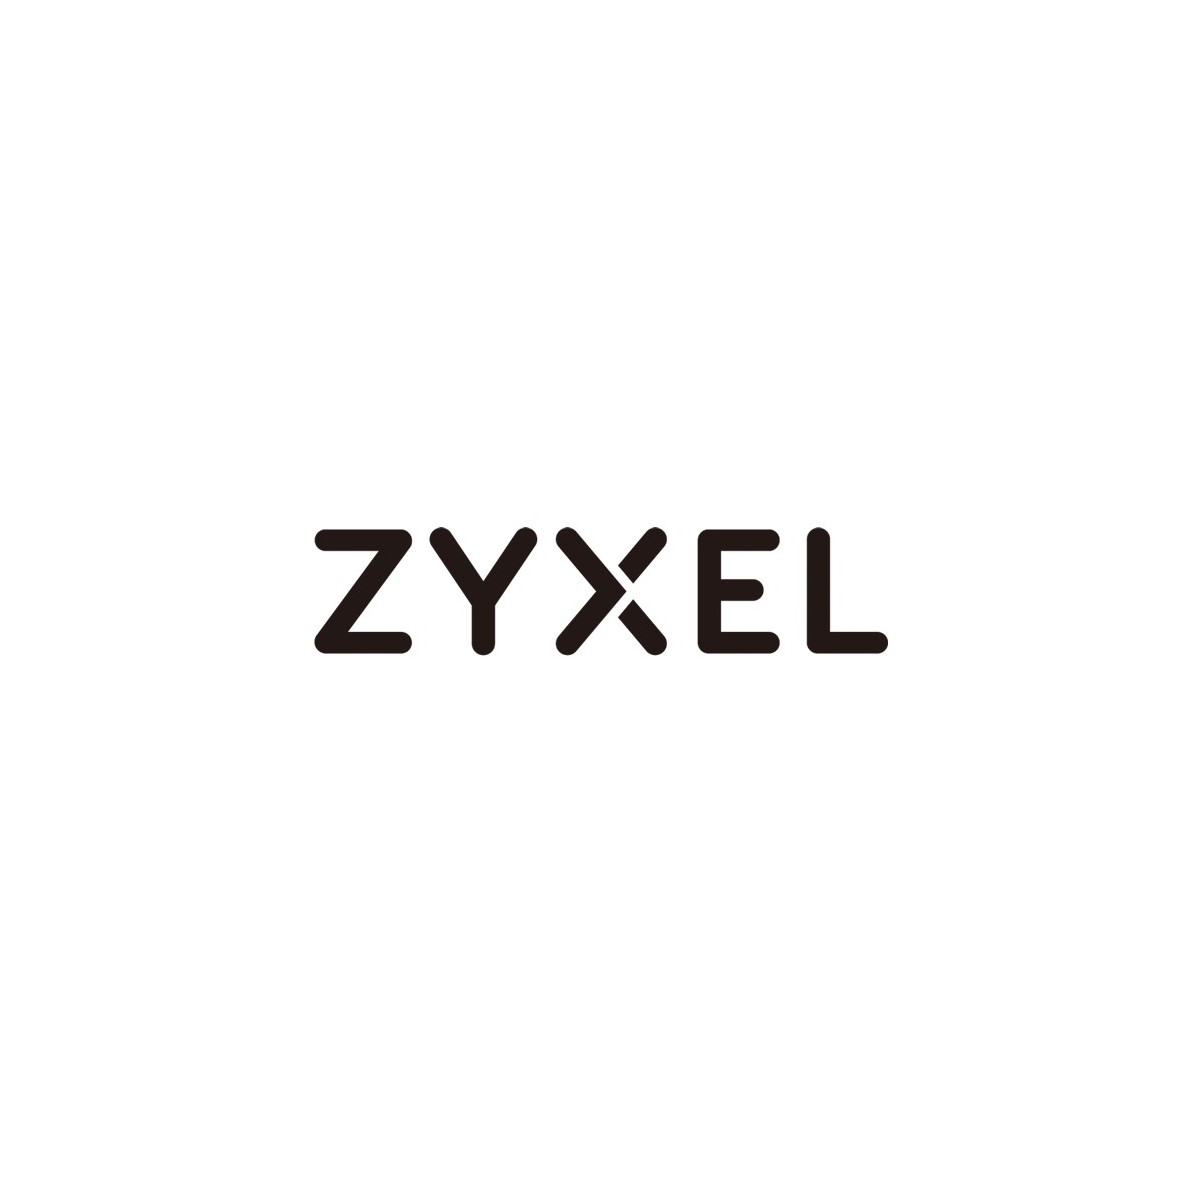 ZyXEL SECUEXTENDER-ZZ3Y05F - 1 license(s) - 3 year(s) - License